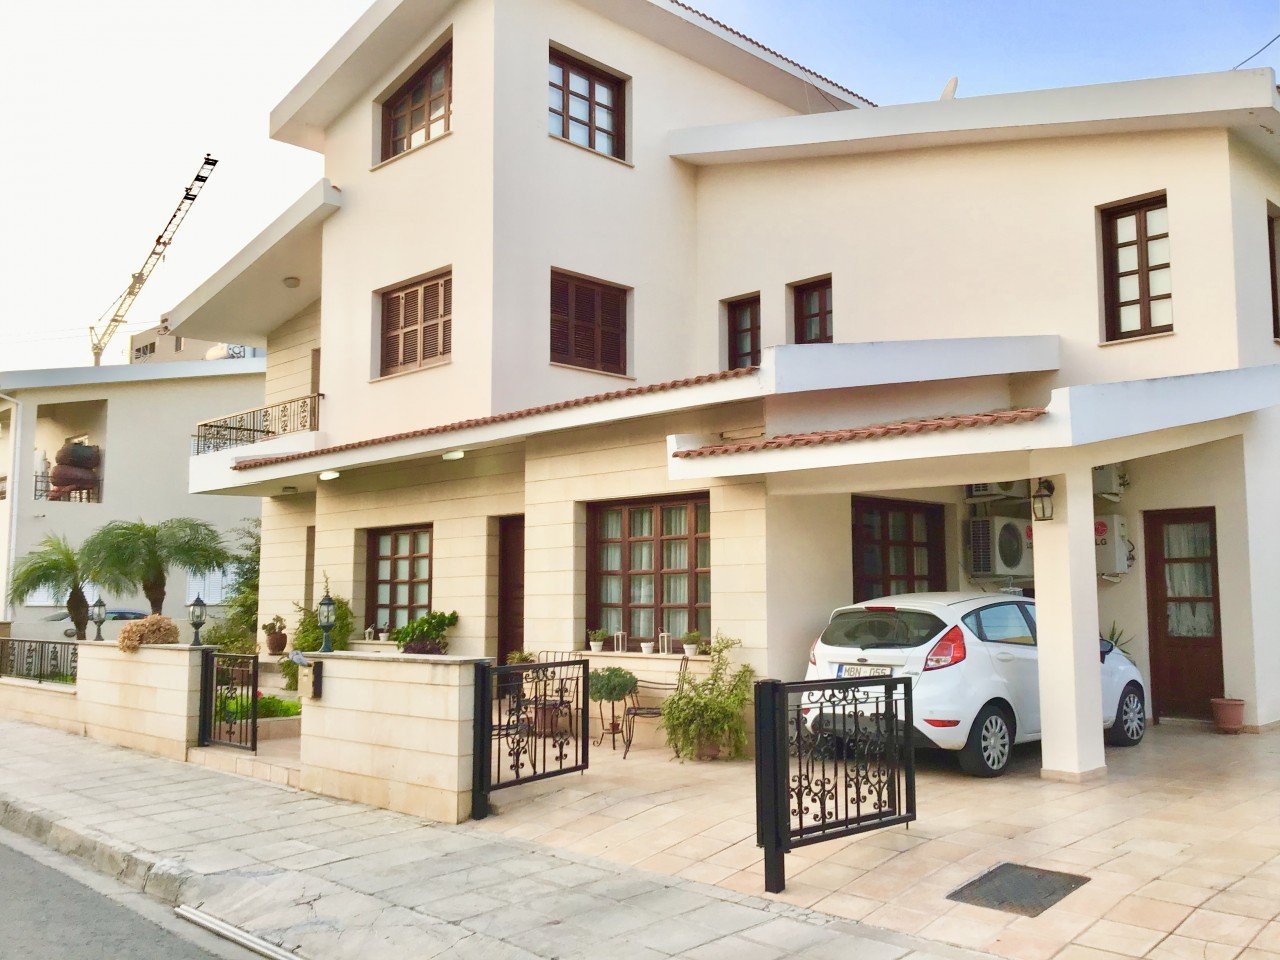 For Sale: House (Detached) in Aglantzia, Nicosia for Rent | Key Realtor Cyprus